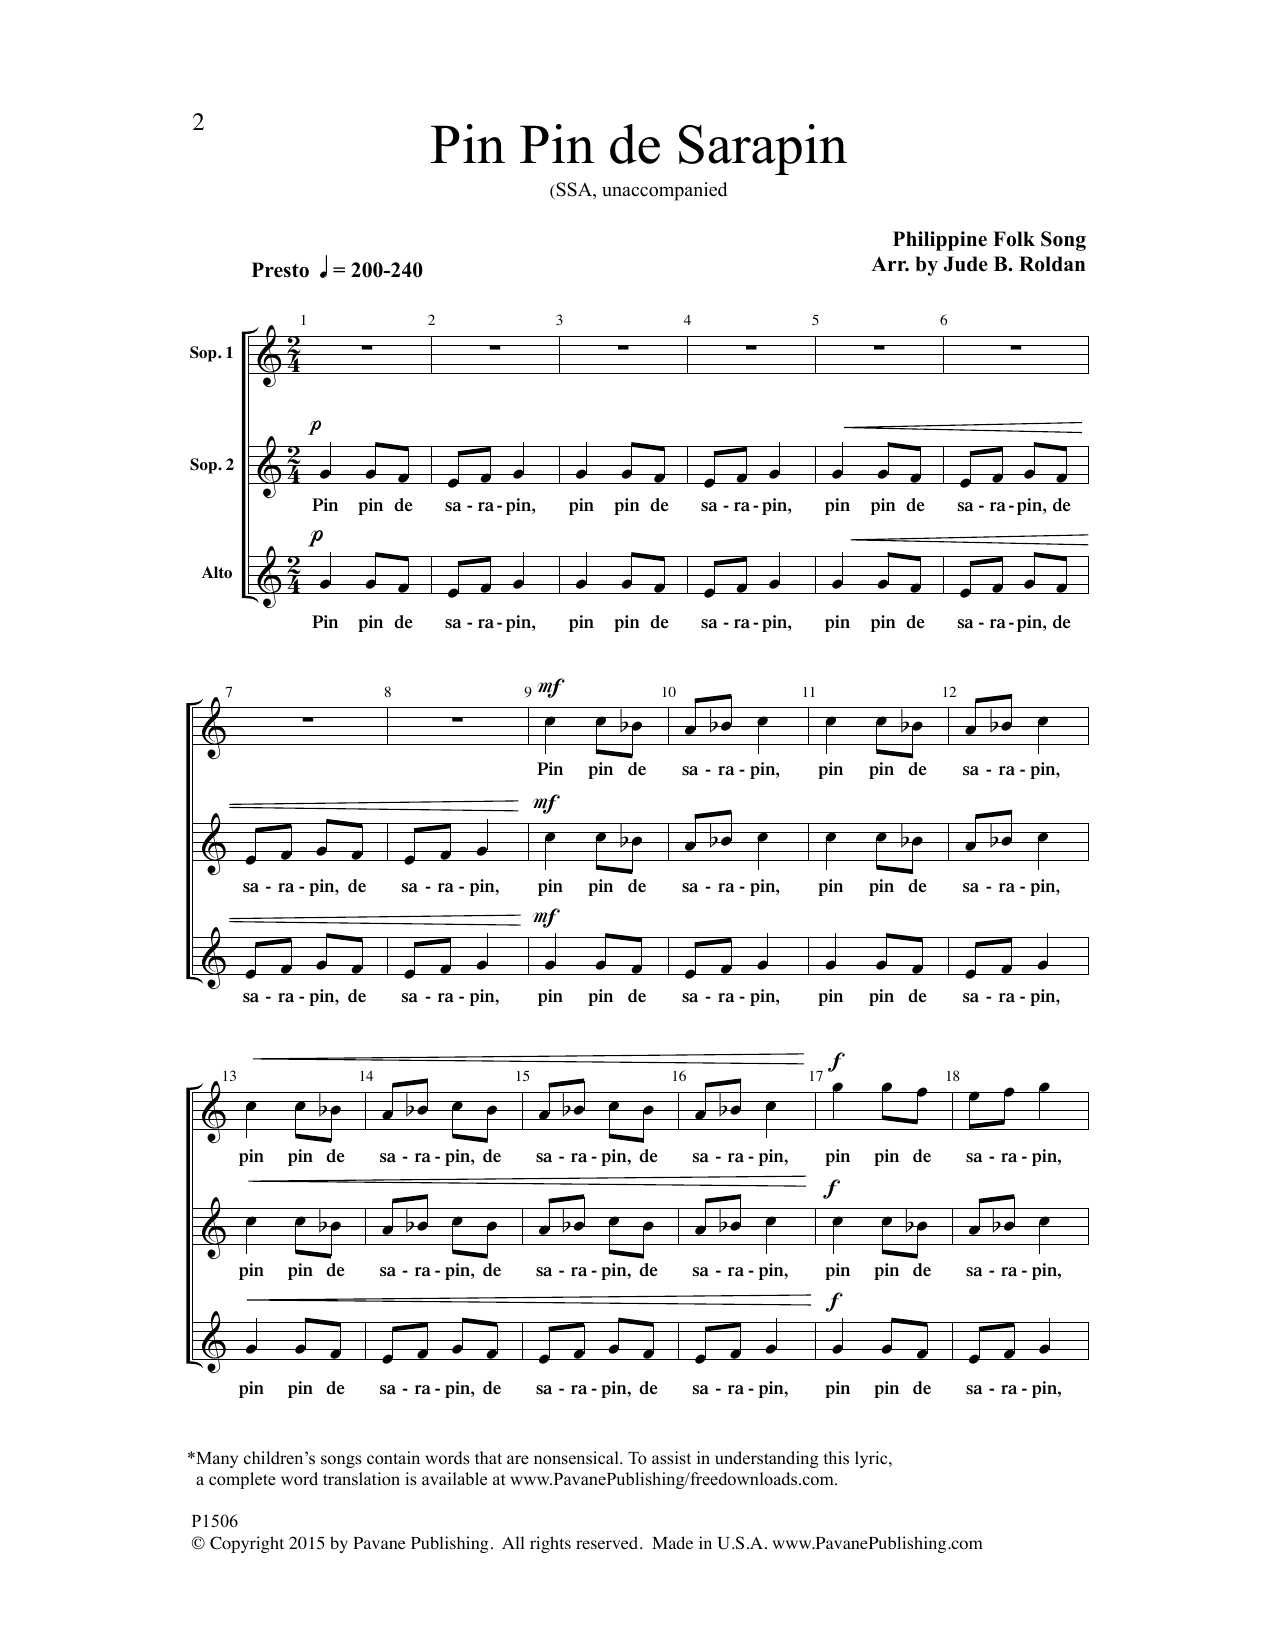 Download Jude B. Roldan Pin Pin de Sarapin Sheet Music and learn how to play SSA Choir PDF digital score in minutes